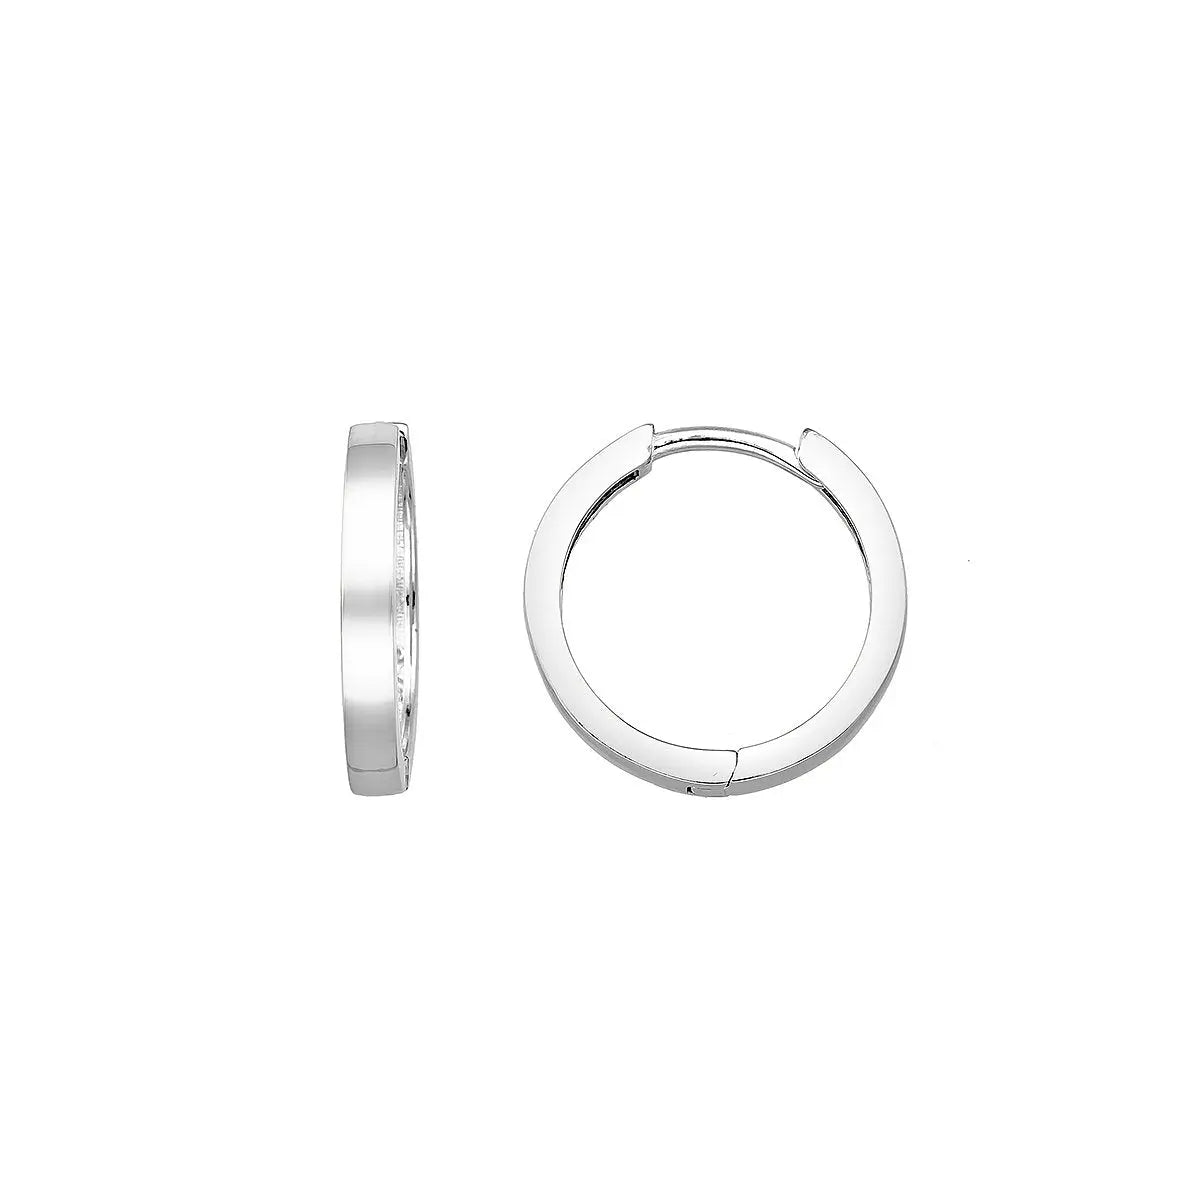 Simple creoler 15mm - Sølv fra Lush Lush Jewelry